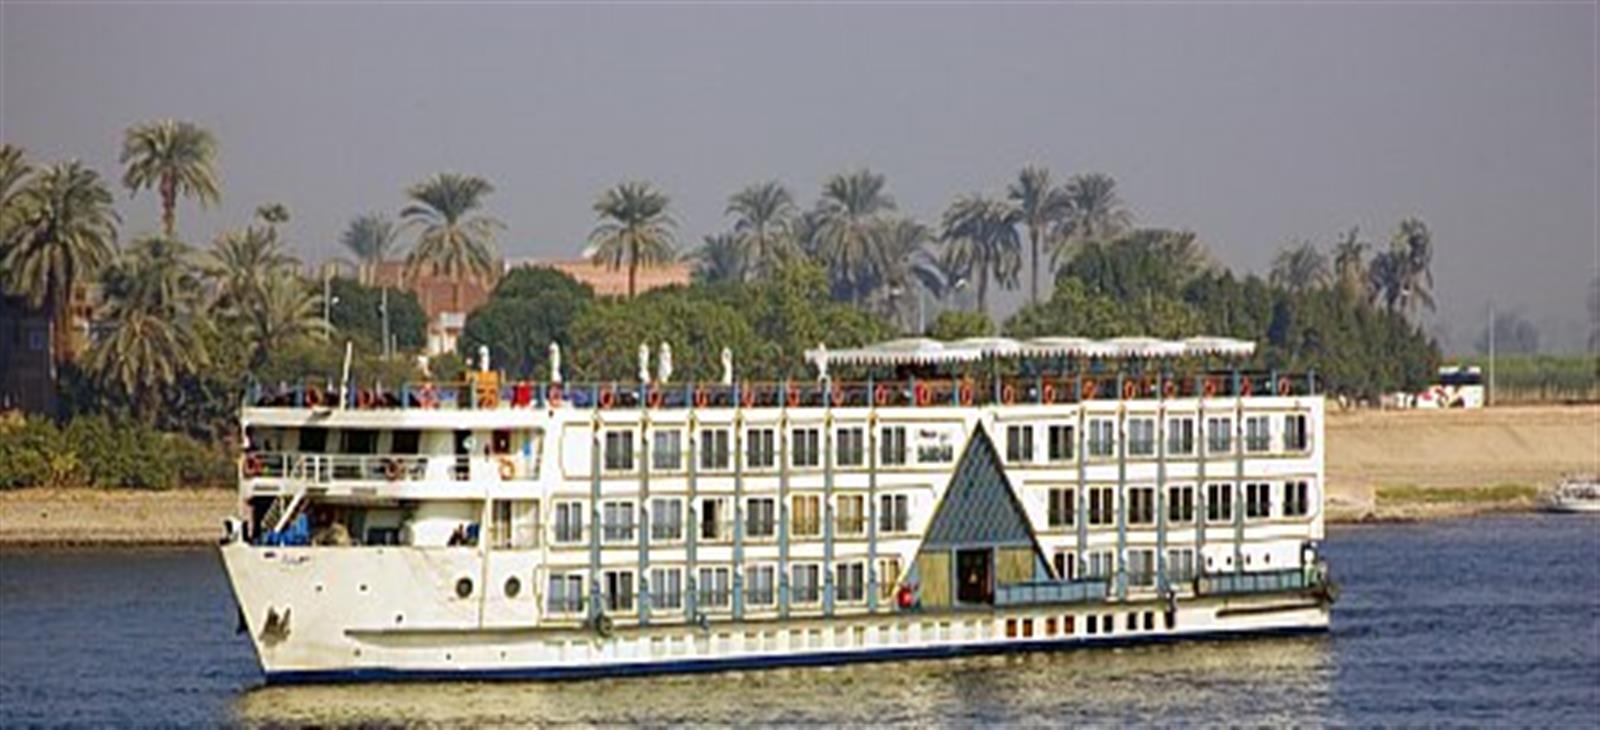 luxor aswan standard cruise